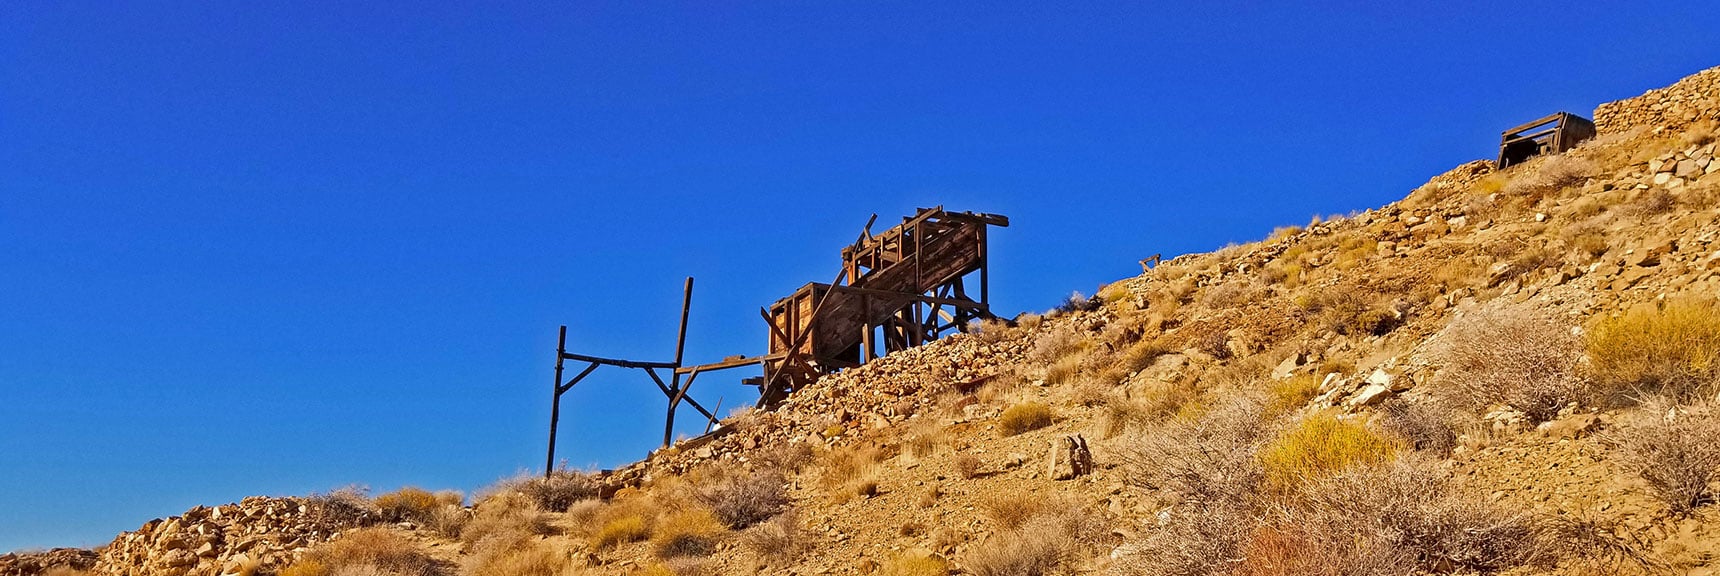 Approaching Cashier Mill | Eureka Mine, Harrisburg, Cashier Mill, Death Valley, California